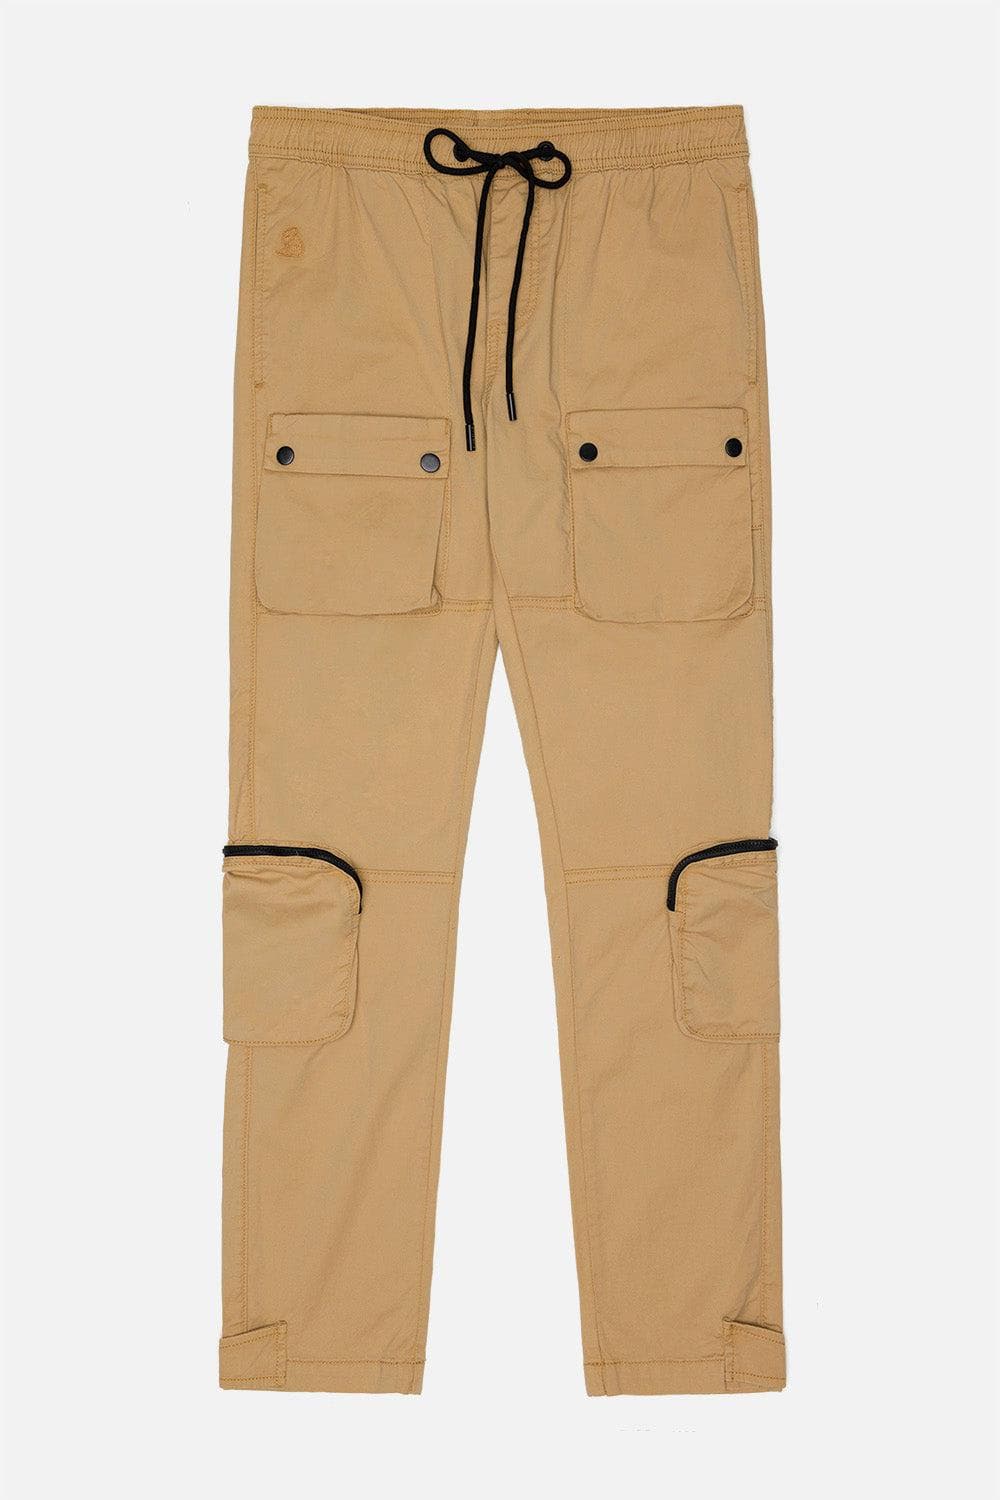 Kuwalla Tee Men's Tan Stretch Twill Hybrid Chino Skinny Stack Cargo Pants